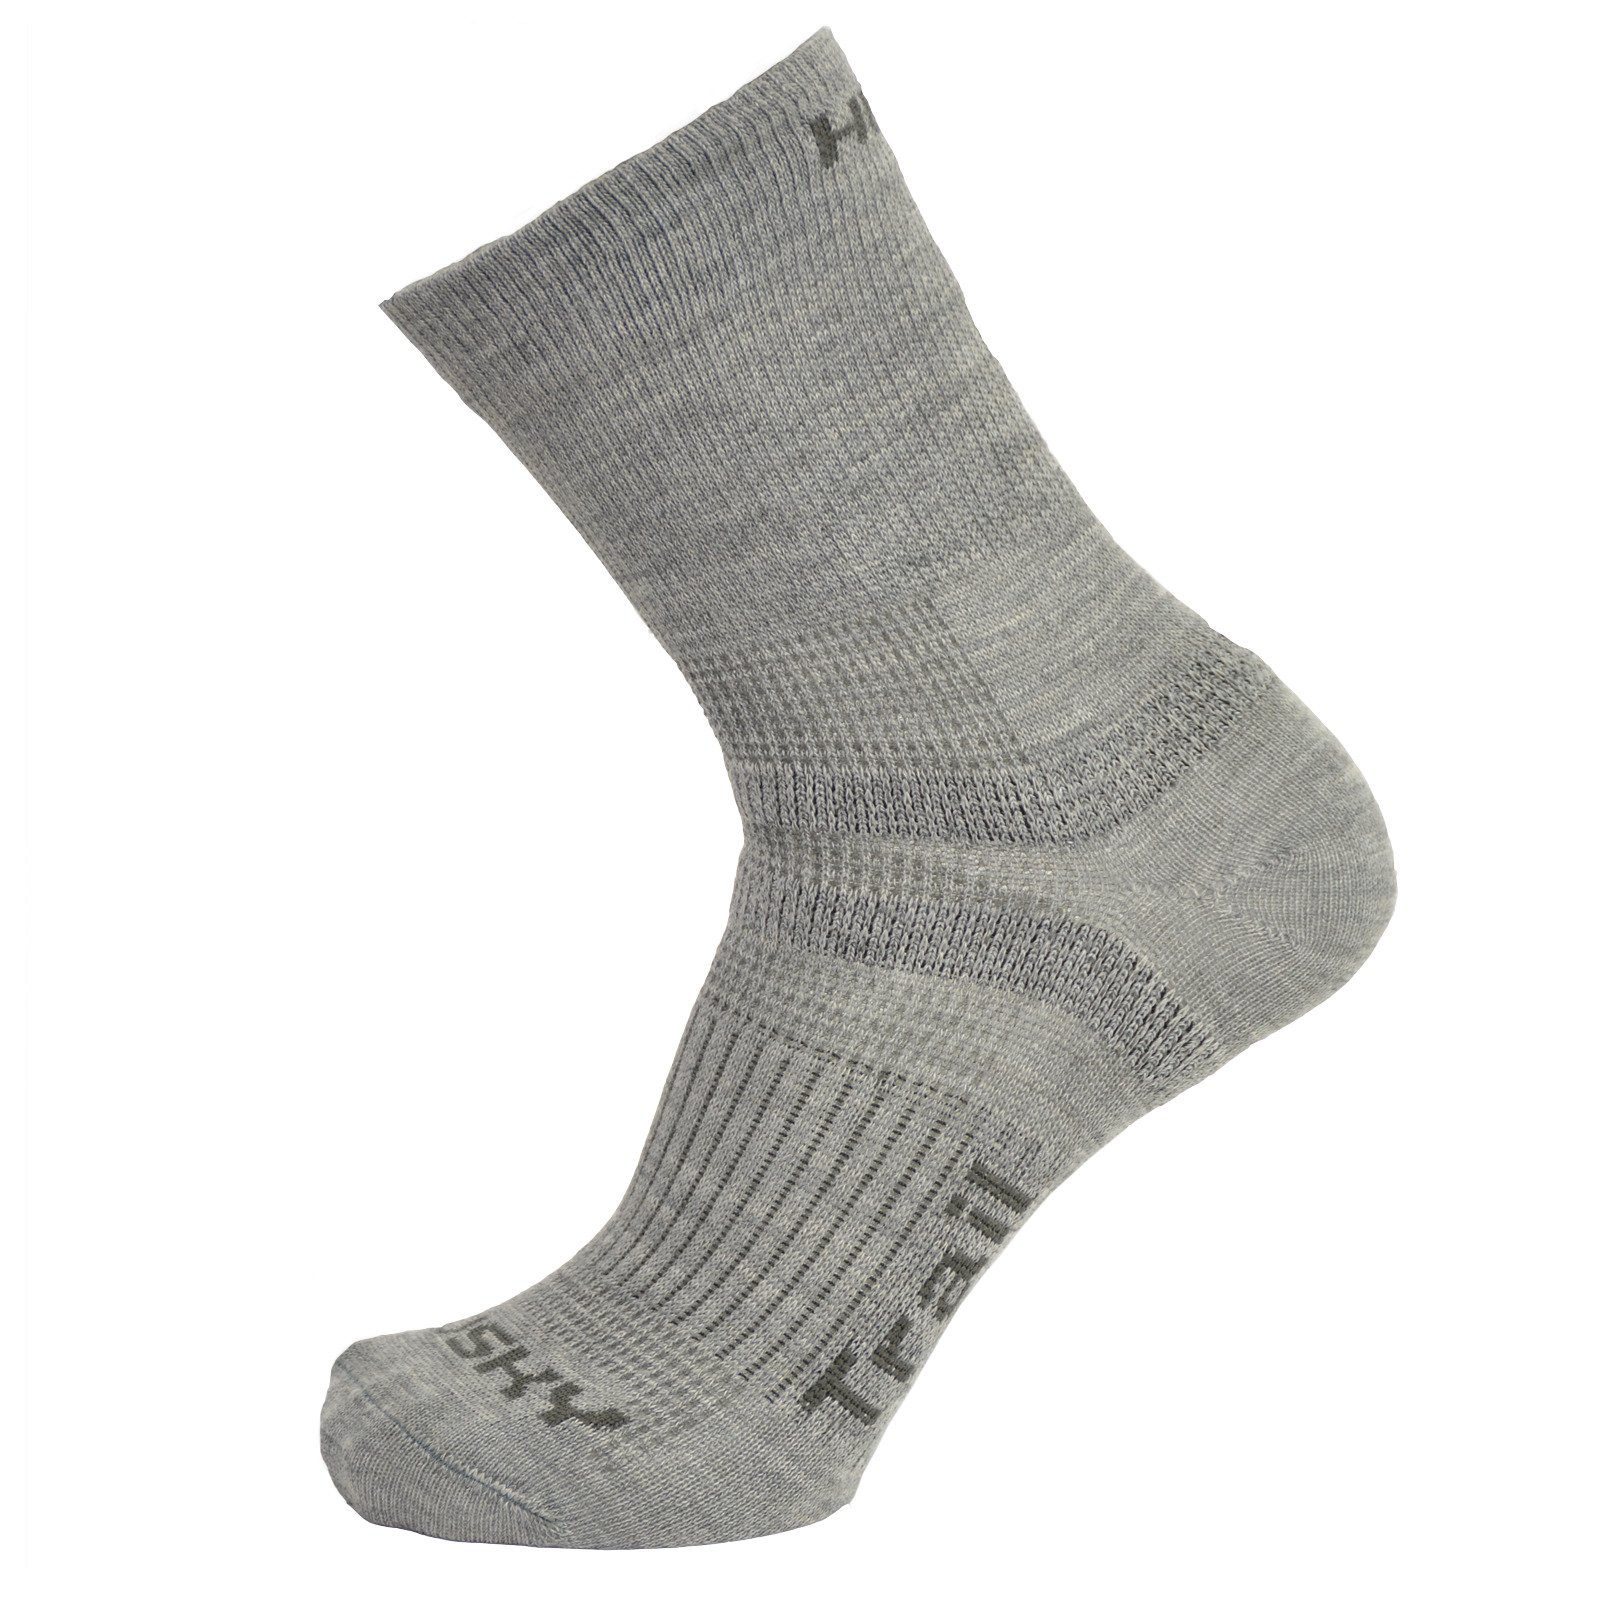 Ponožky HUSKY Trail sv. šedá + Sleva 5% - zadej v košíku kód: SLEVA5 Velikost: M (36-40)